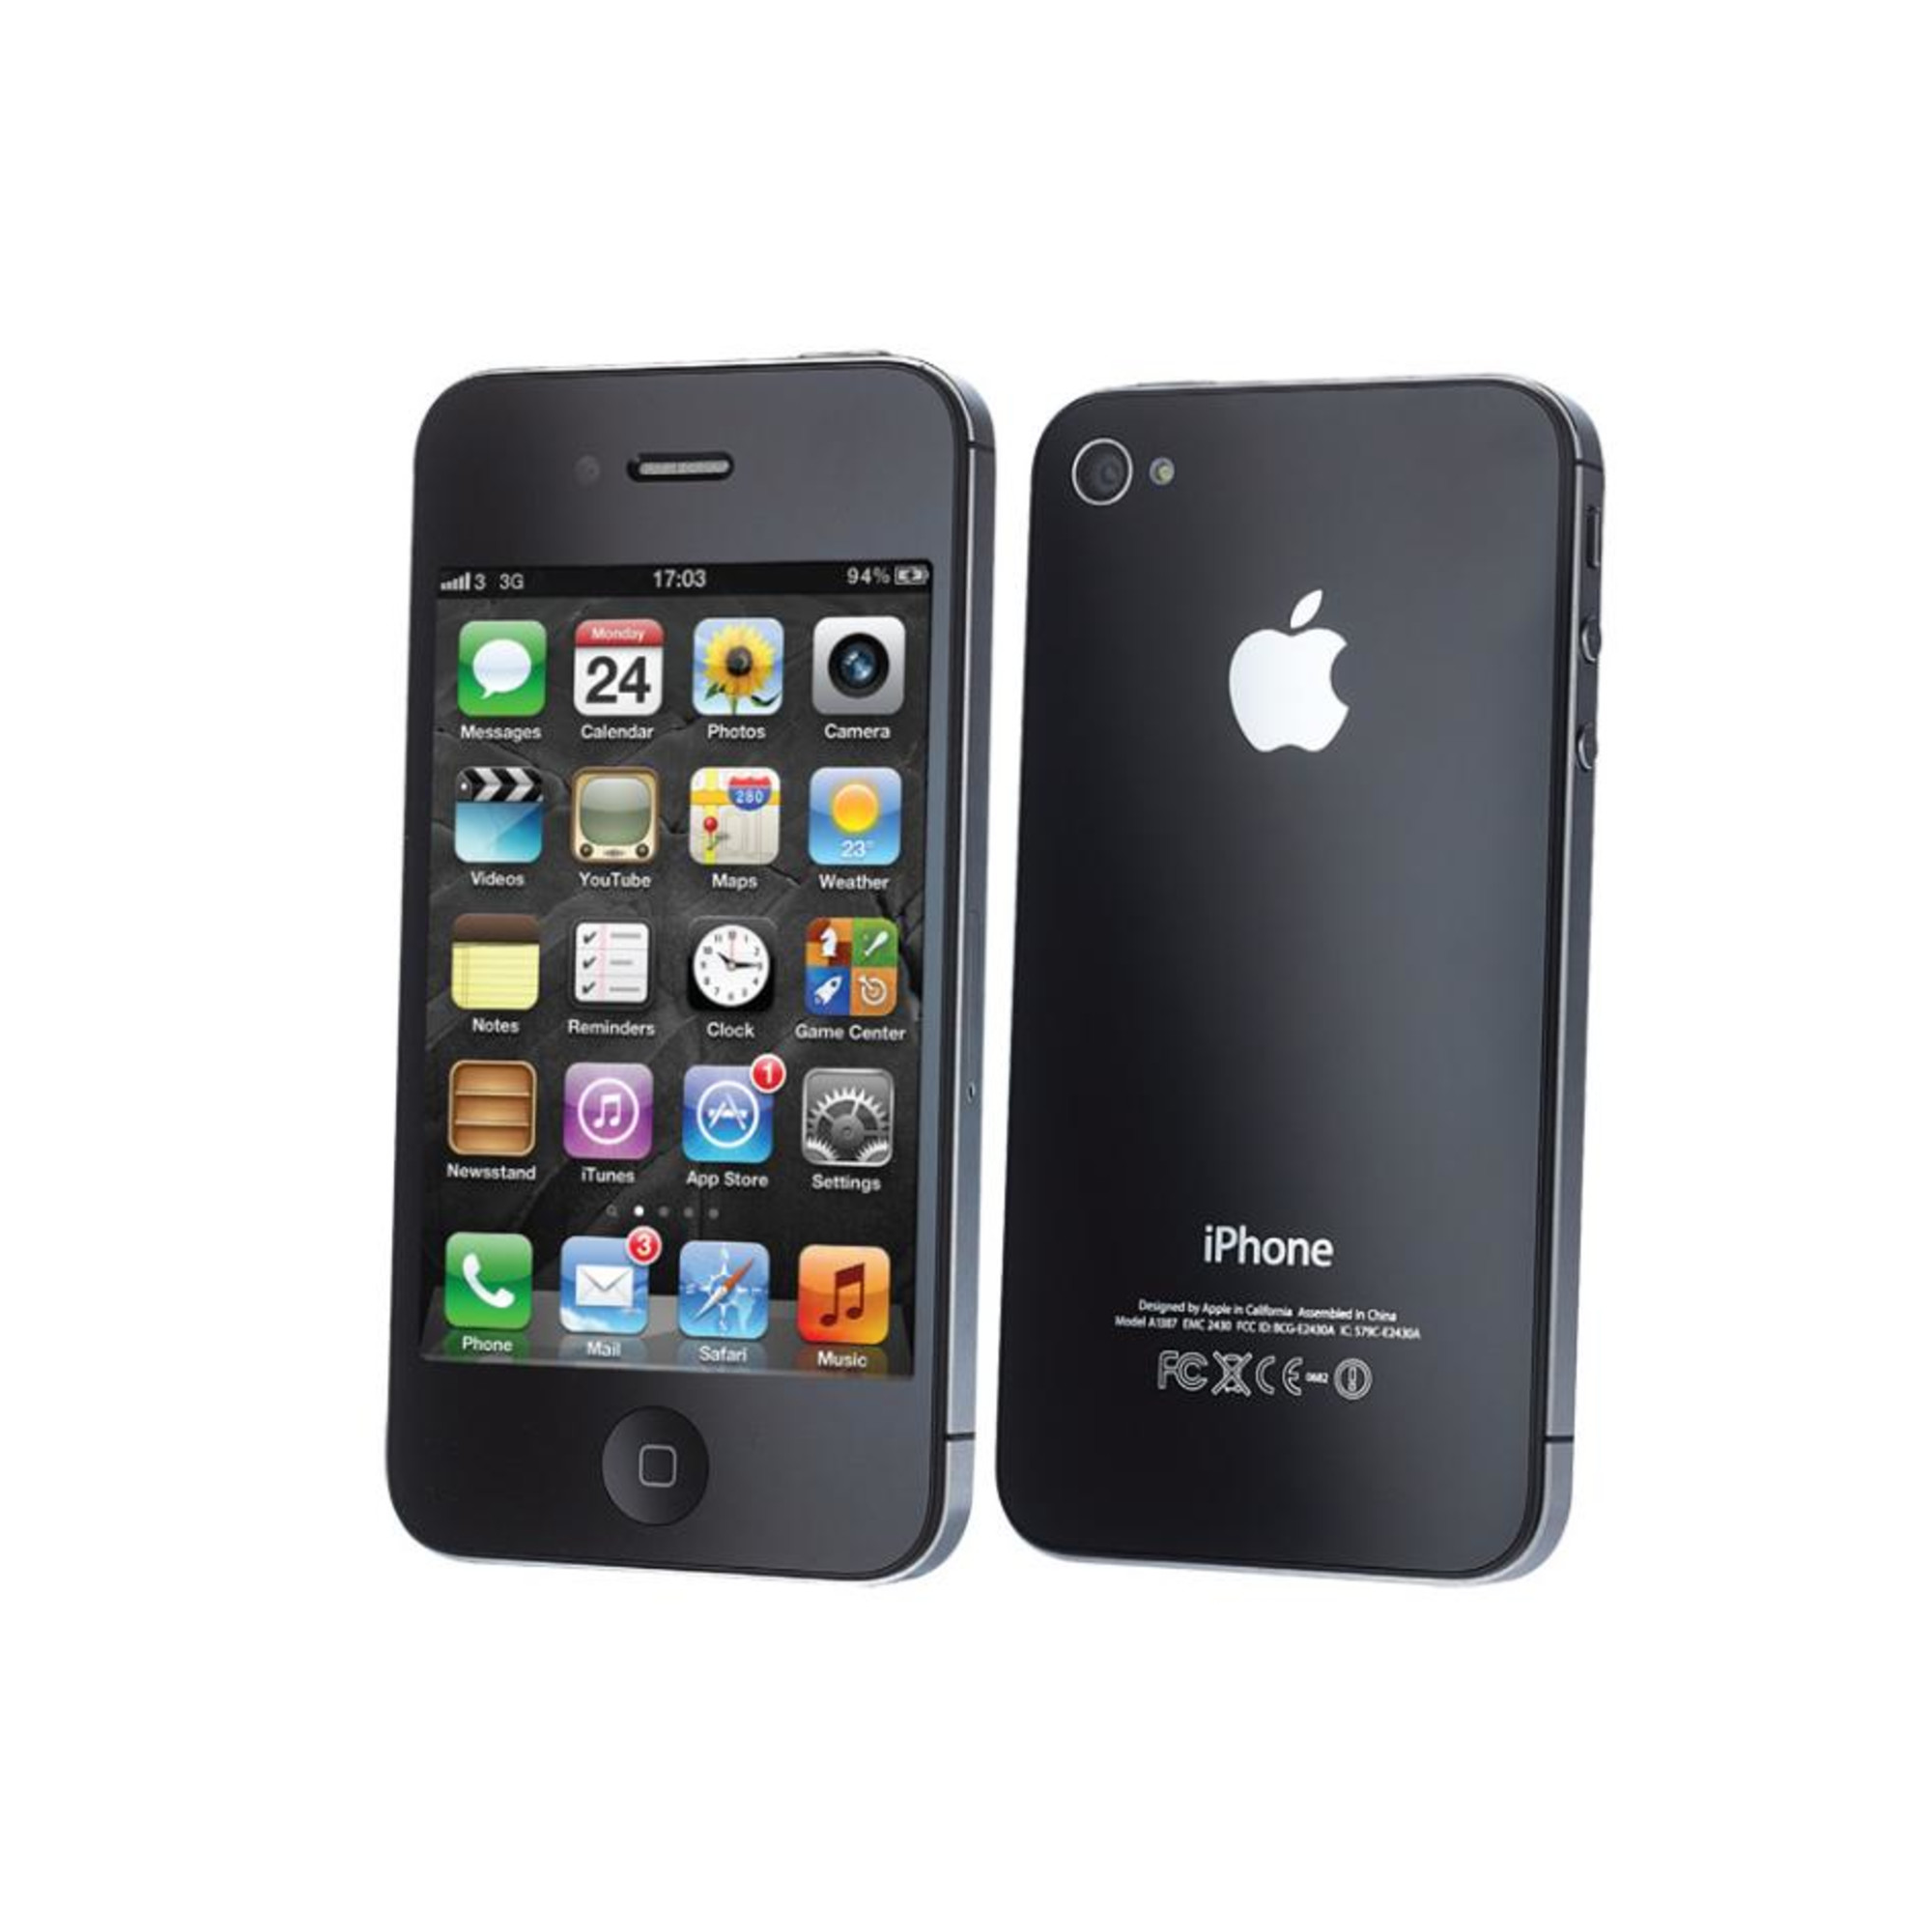 Apple Iphone 4 8gb Factory Unlocked Gsm Ios Smartphone Ebay